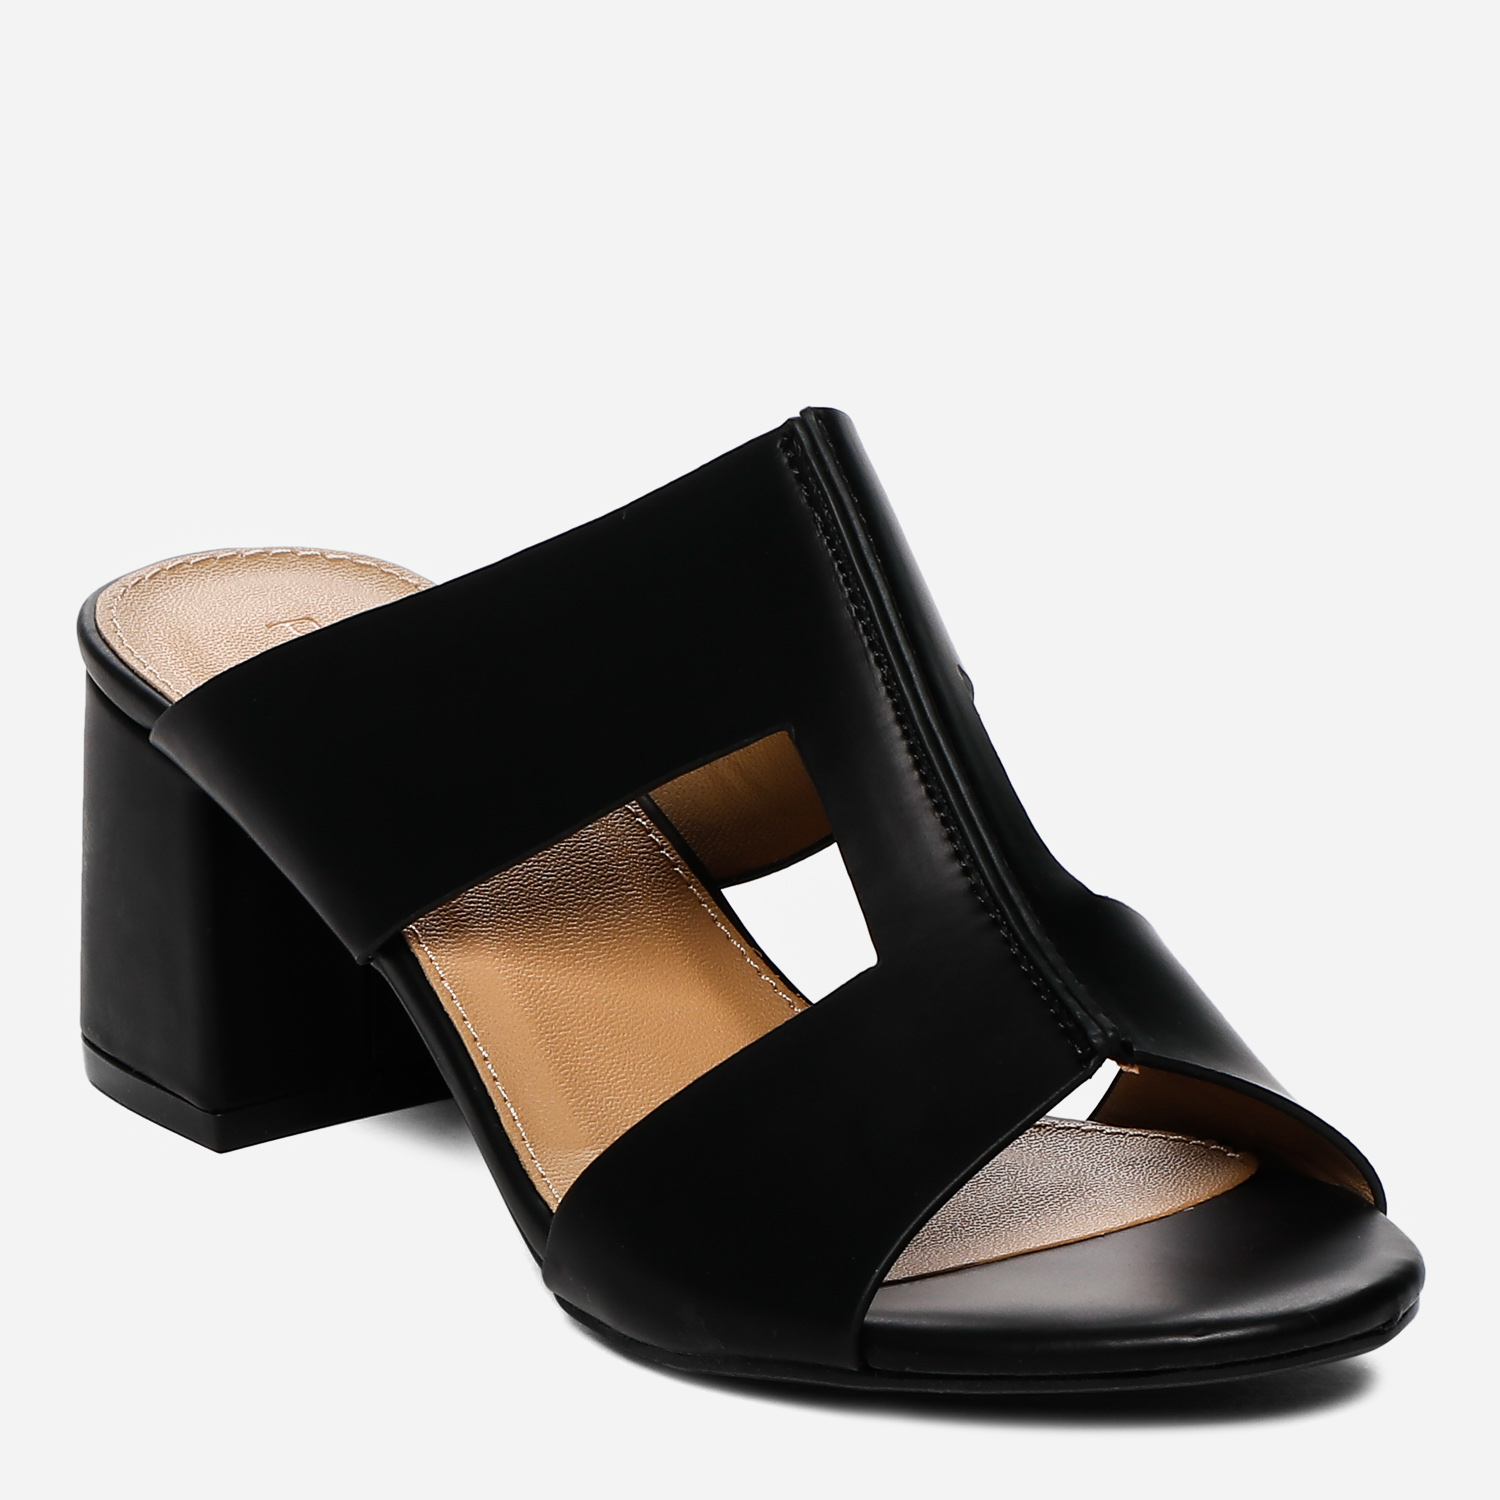 parisian black heels